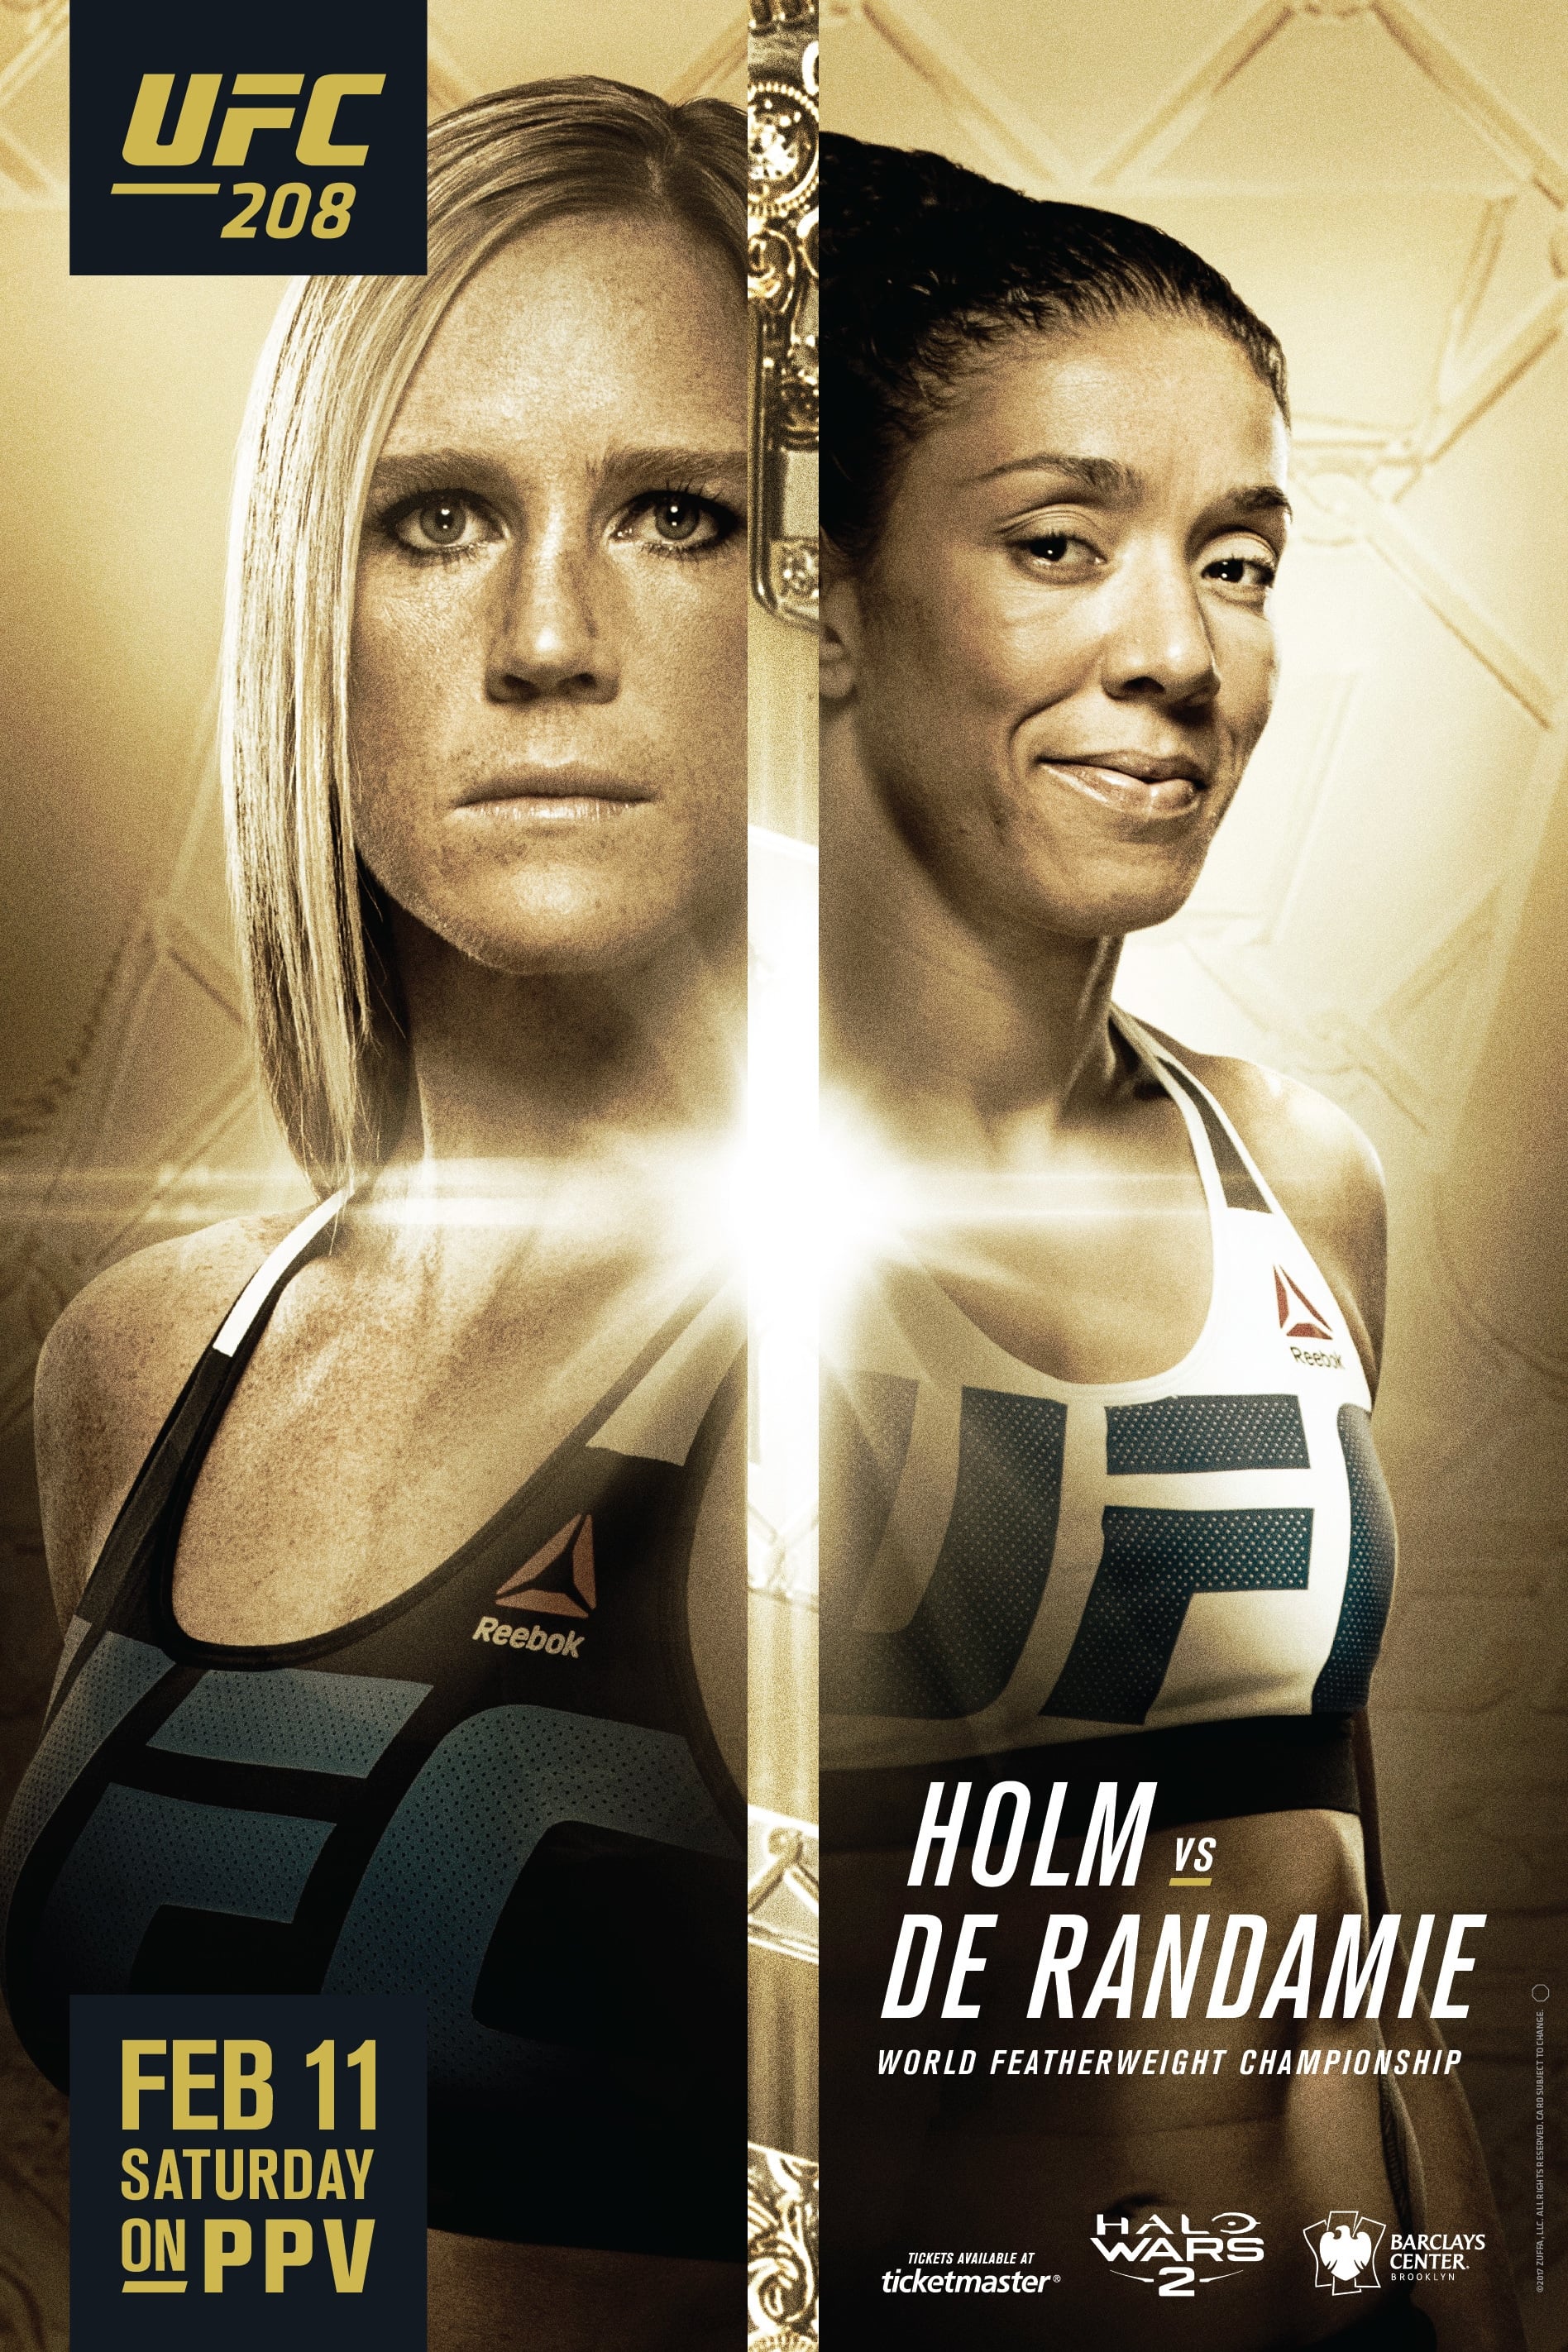 UFC 208: Holm vs. de Randamie (2017)